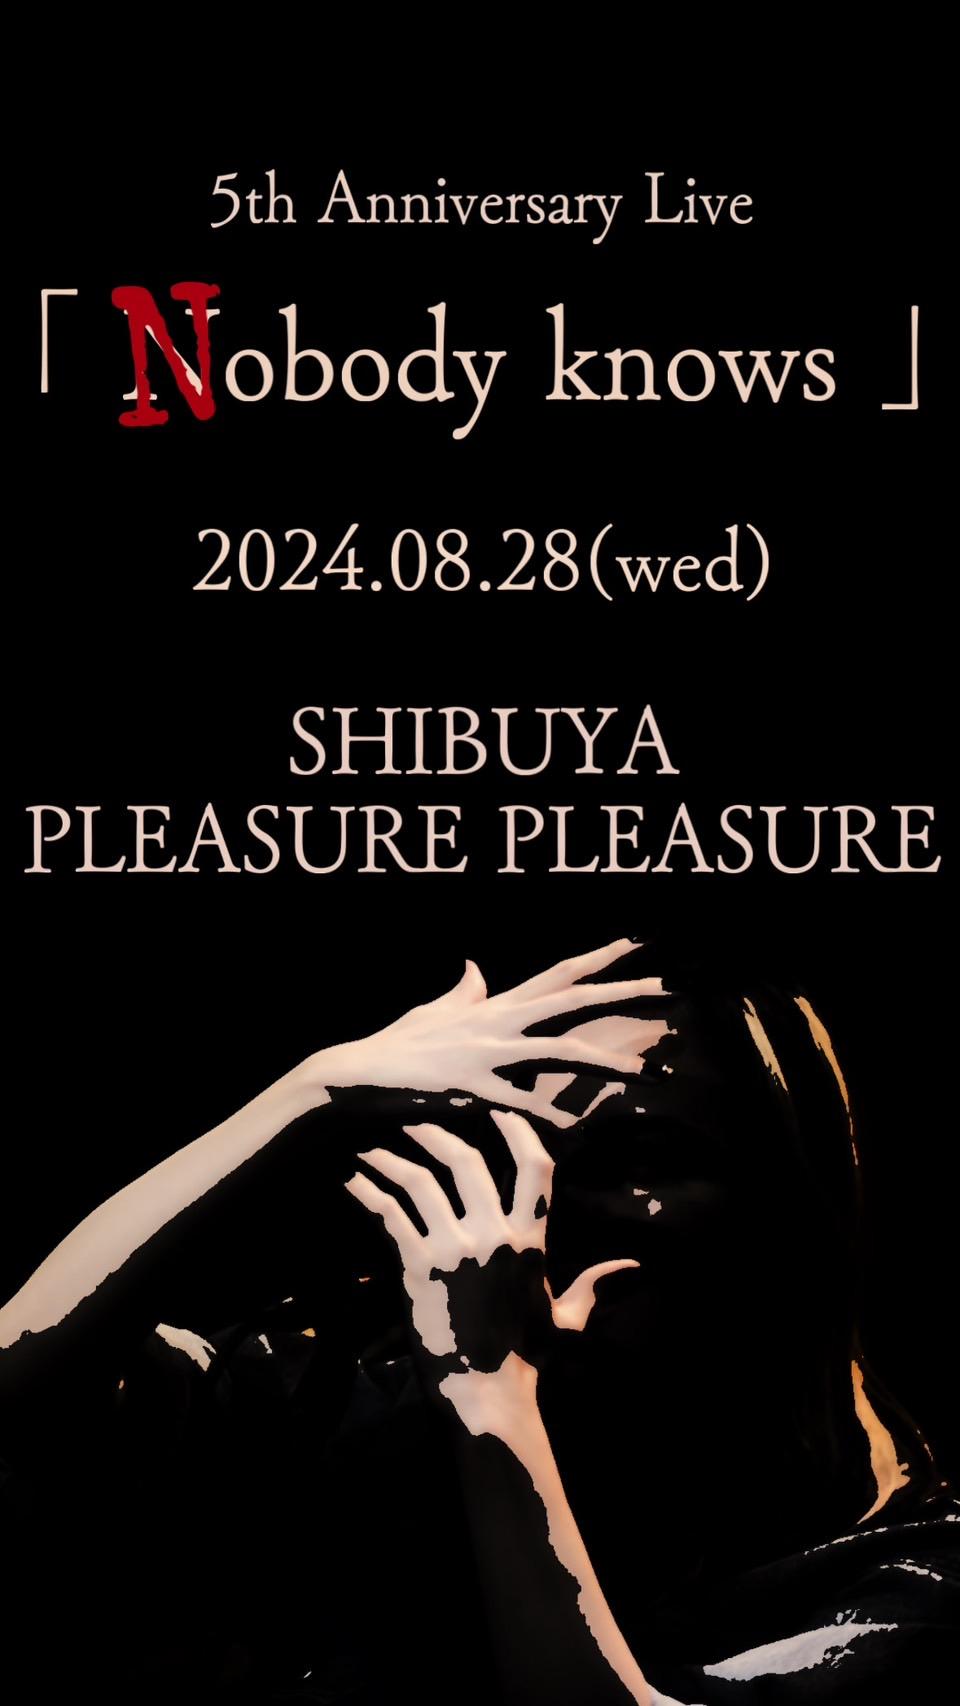 5th Anniversary Live「Nobody knows」